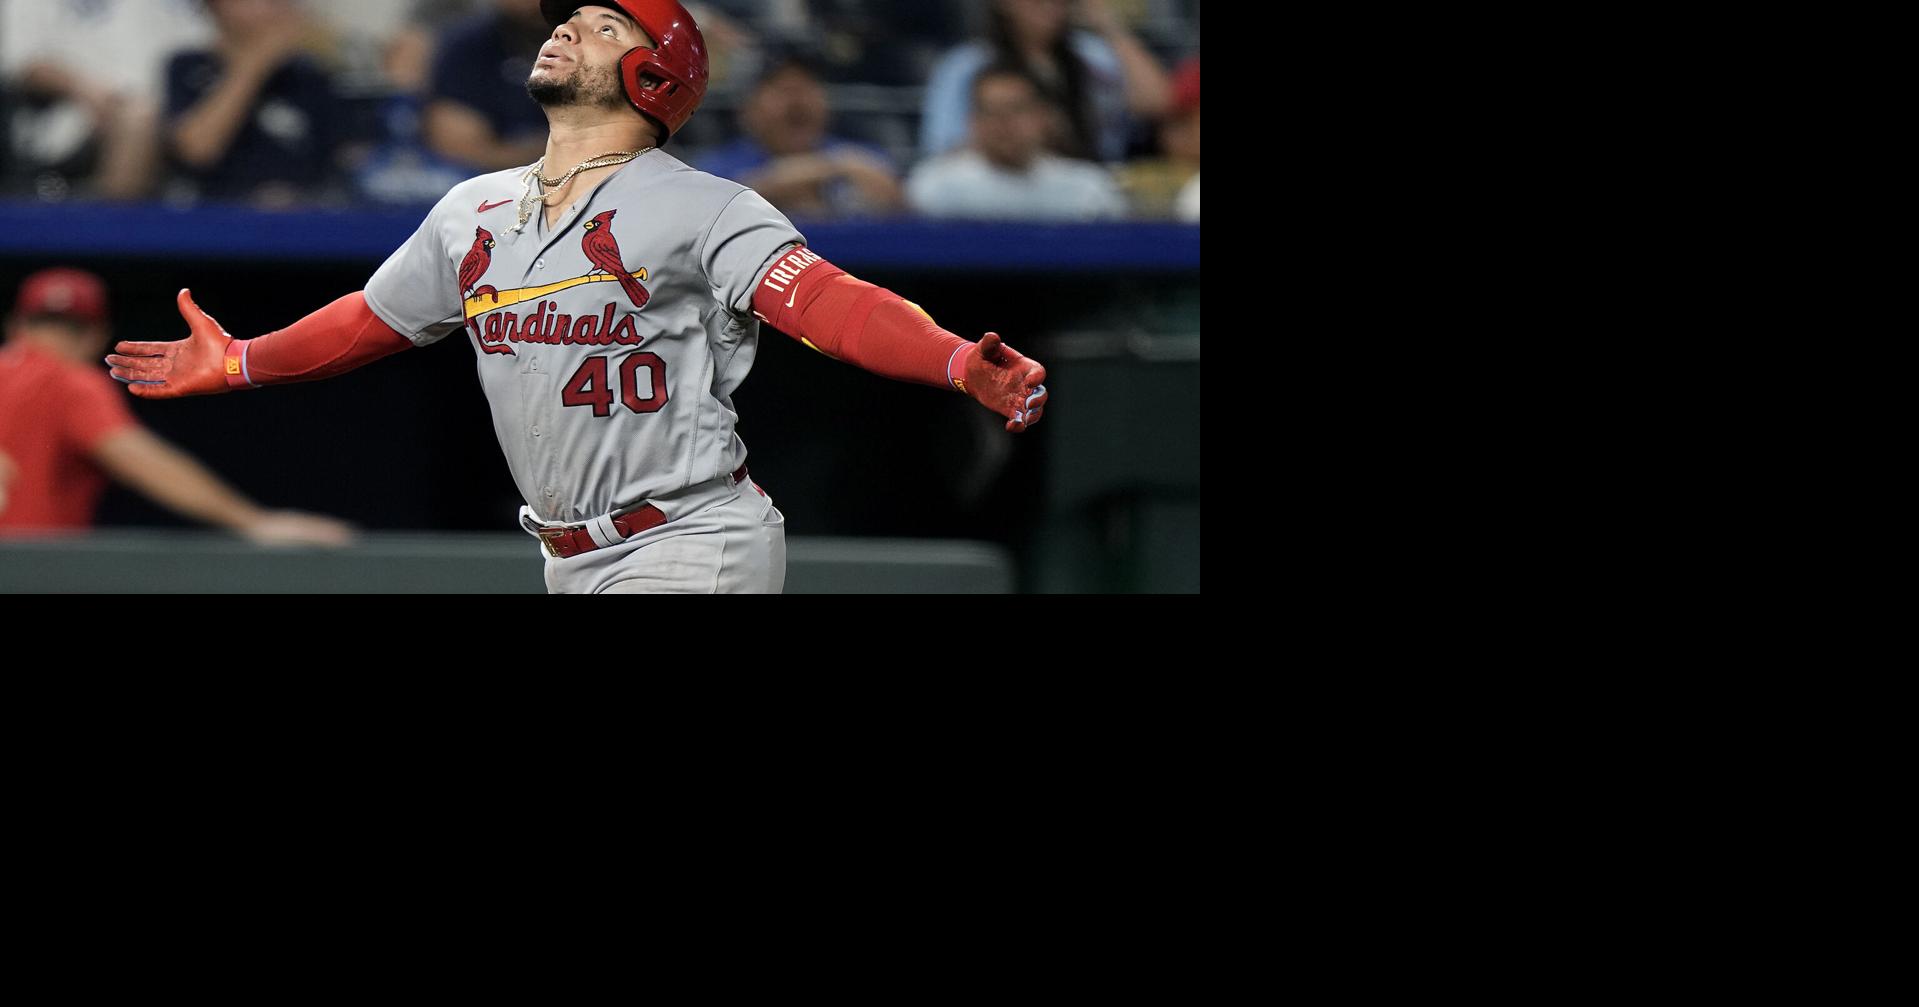 Lars Nootbaar utilizing tips from 'swing master' Nolan Arenado: Cardinals  Extra